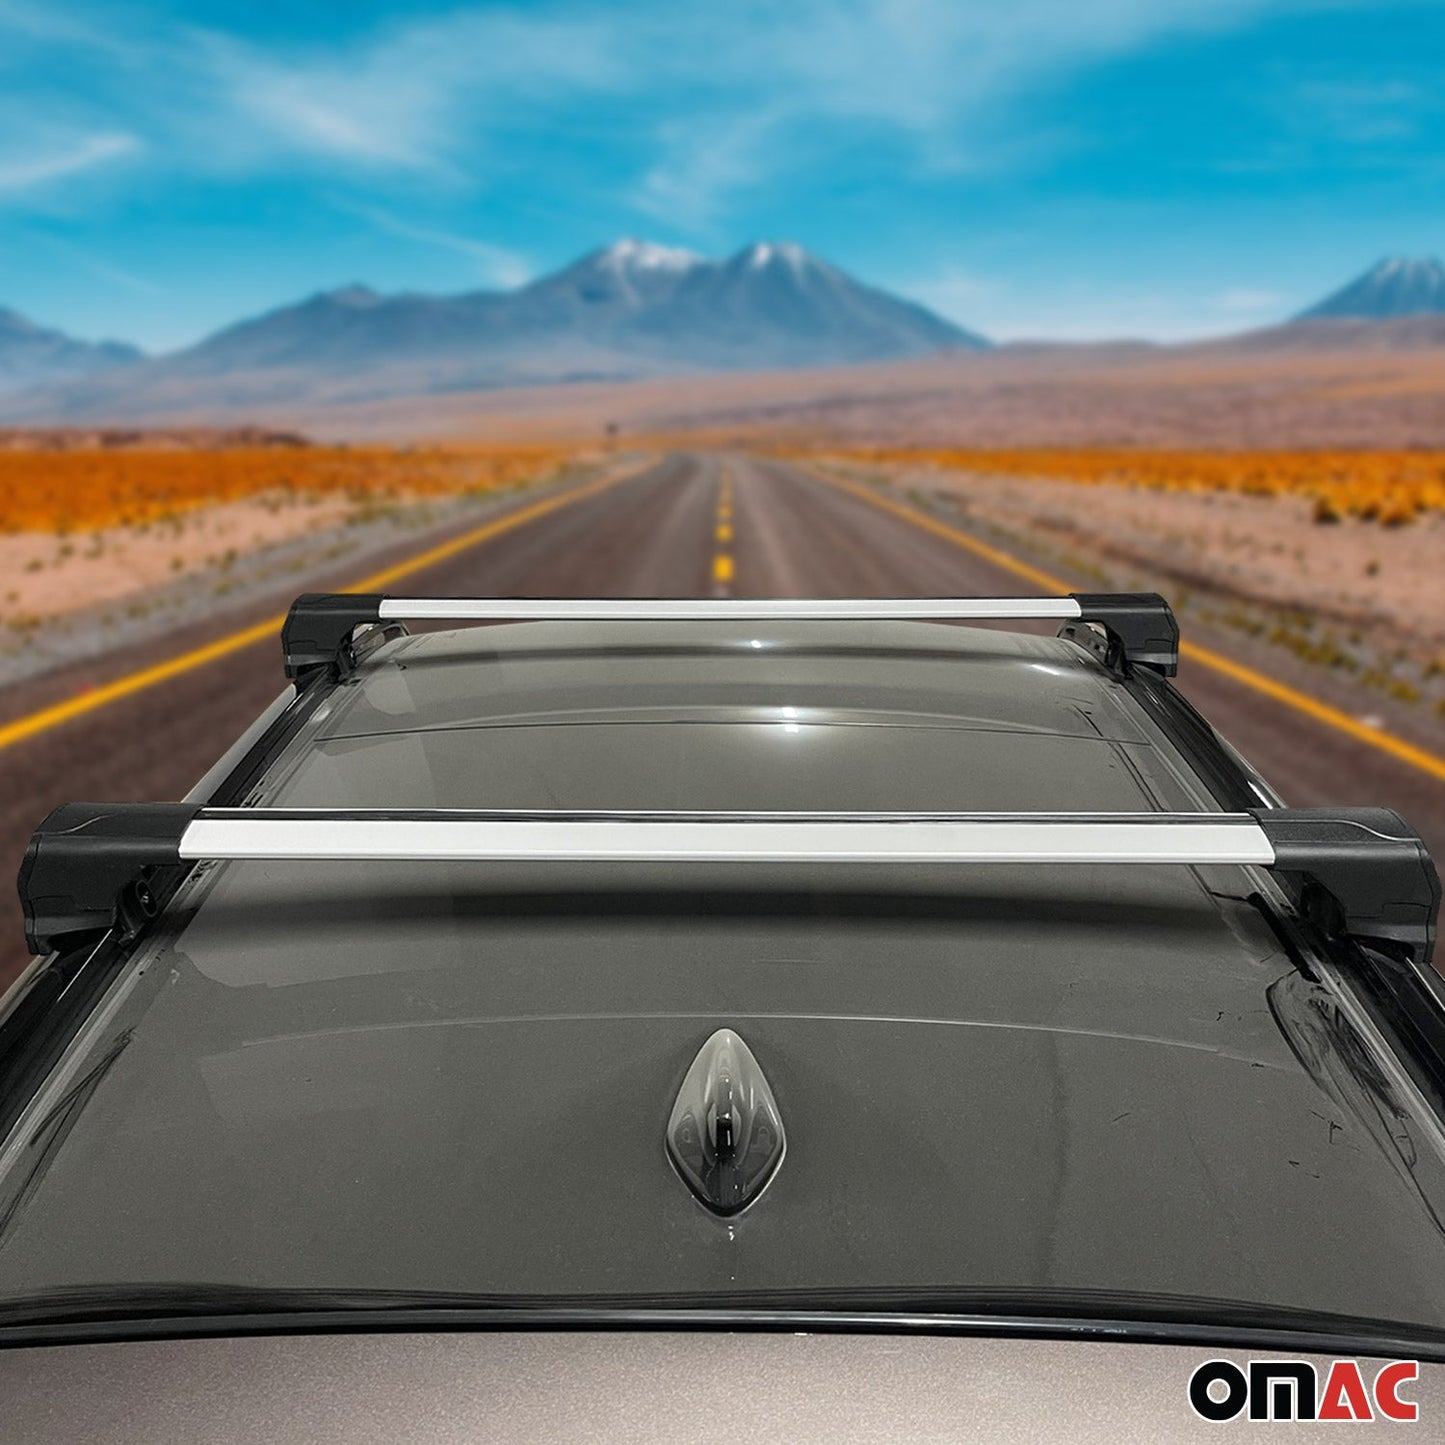 OMAC Alu Roof Racks Cross Bars Luggage Carrier for Audi Q7 2007-2015 Silver 2Pcs '1109916